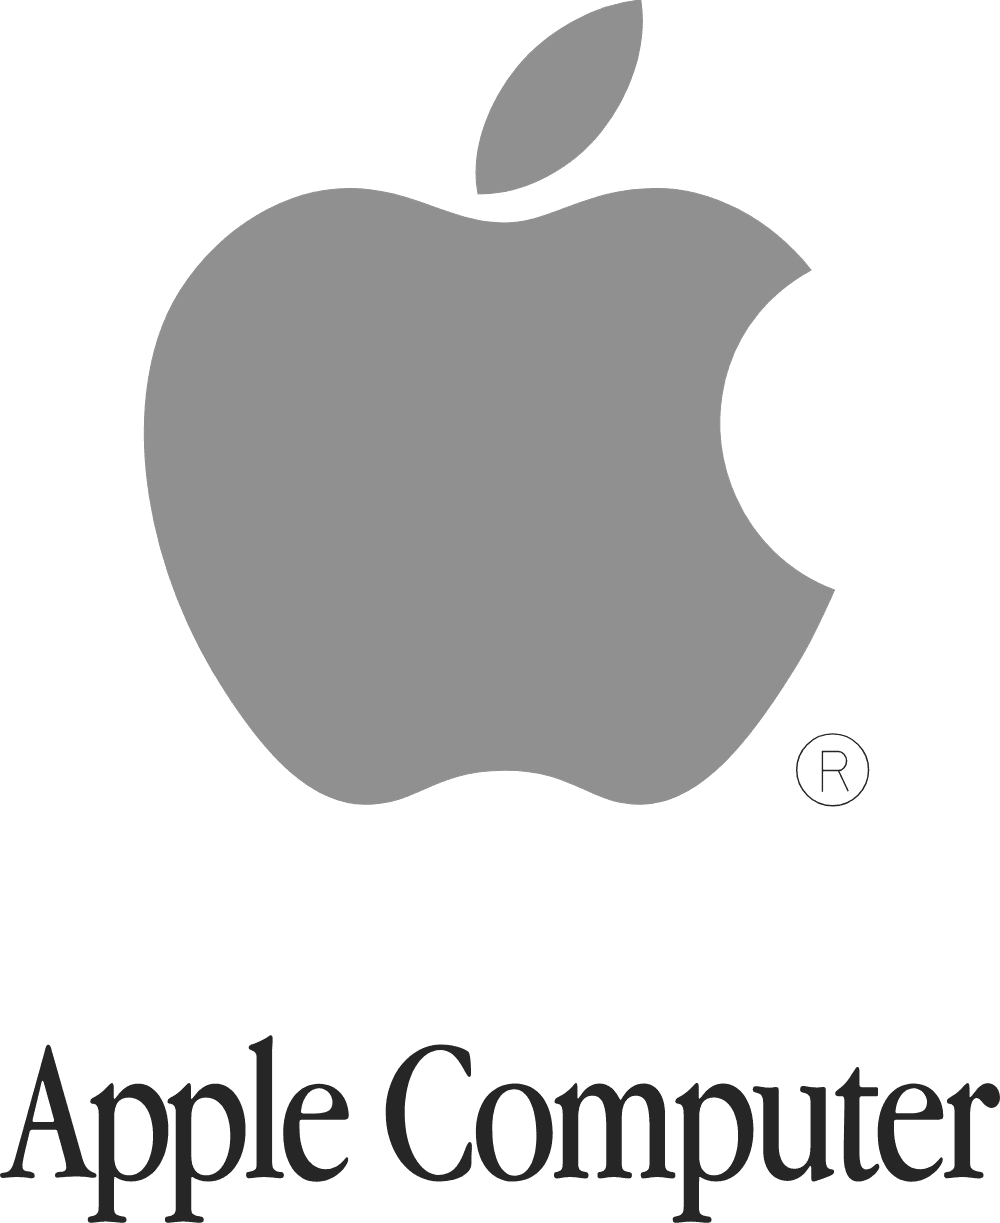 Old Apple Computer Logo download